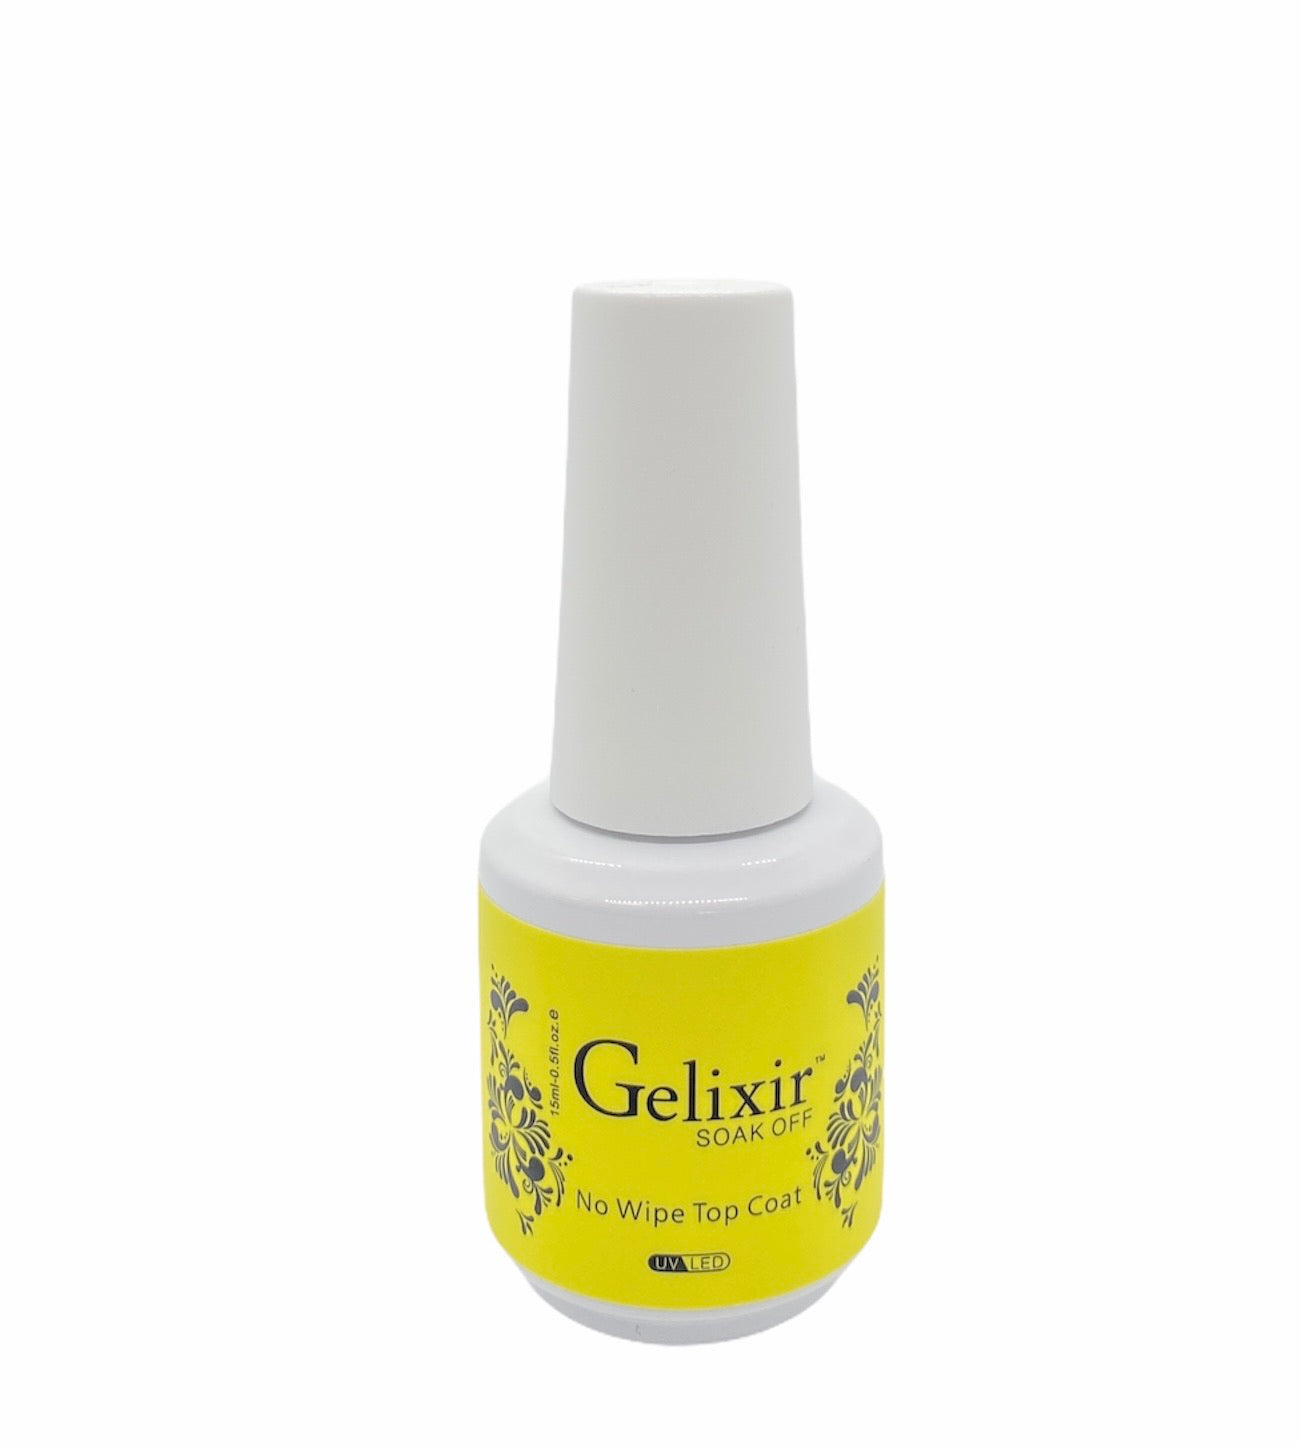 Gelixir Soak Off No Wipe Topcoat 0.5 oz - Premier Nail Supply 